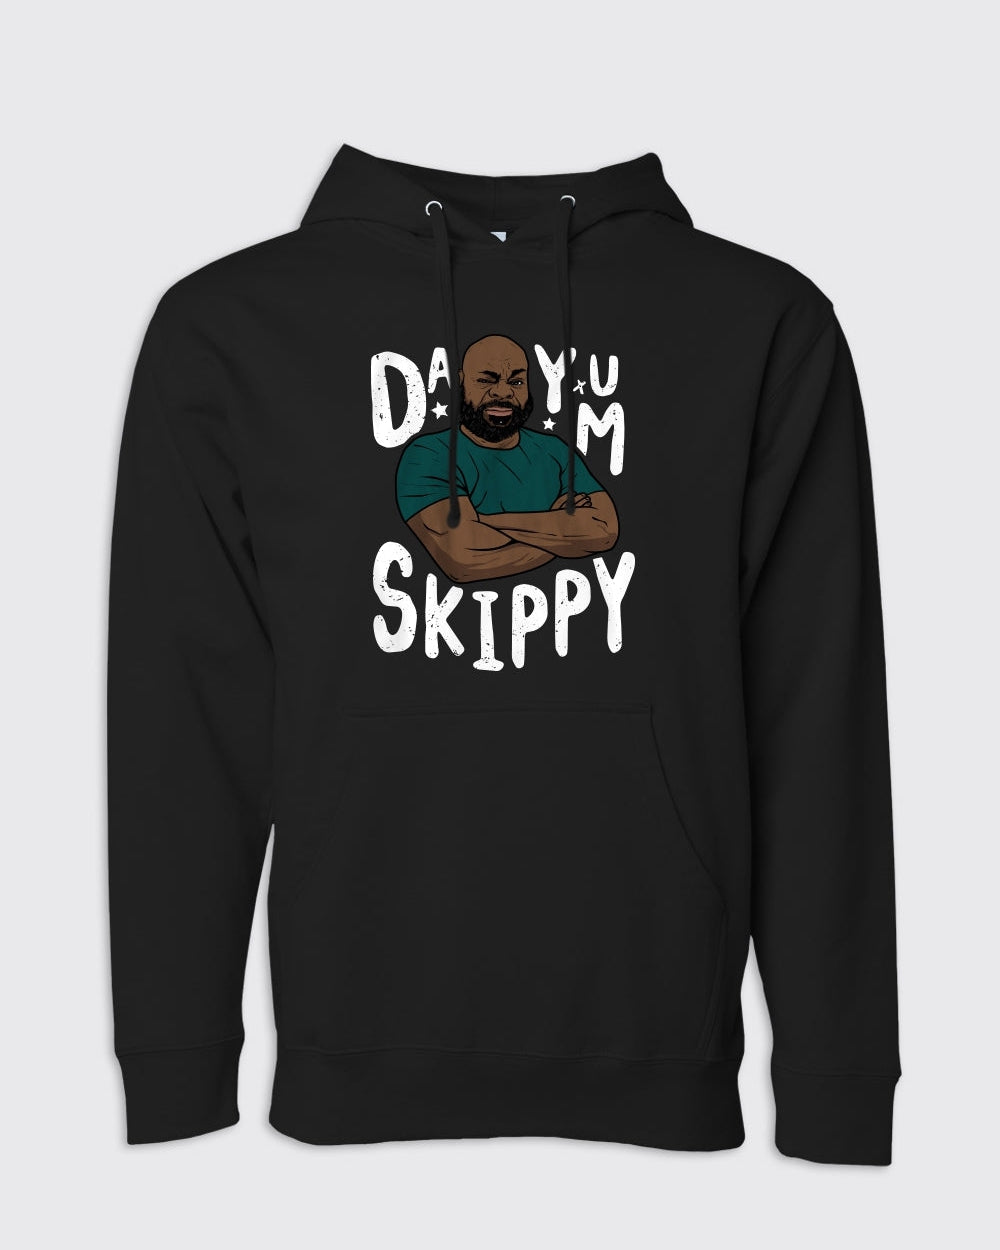 Hollis Thomas Dayum Skippy Hoodie - Philly Sports Shirts